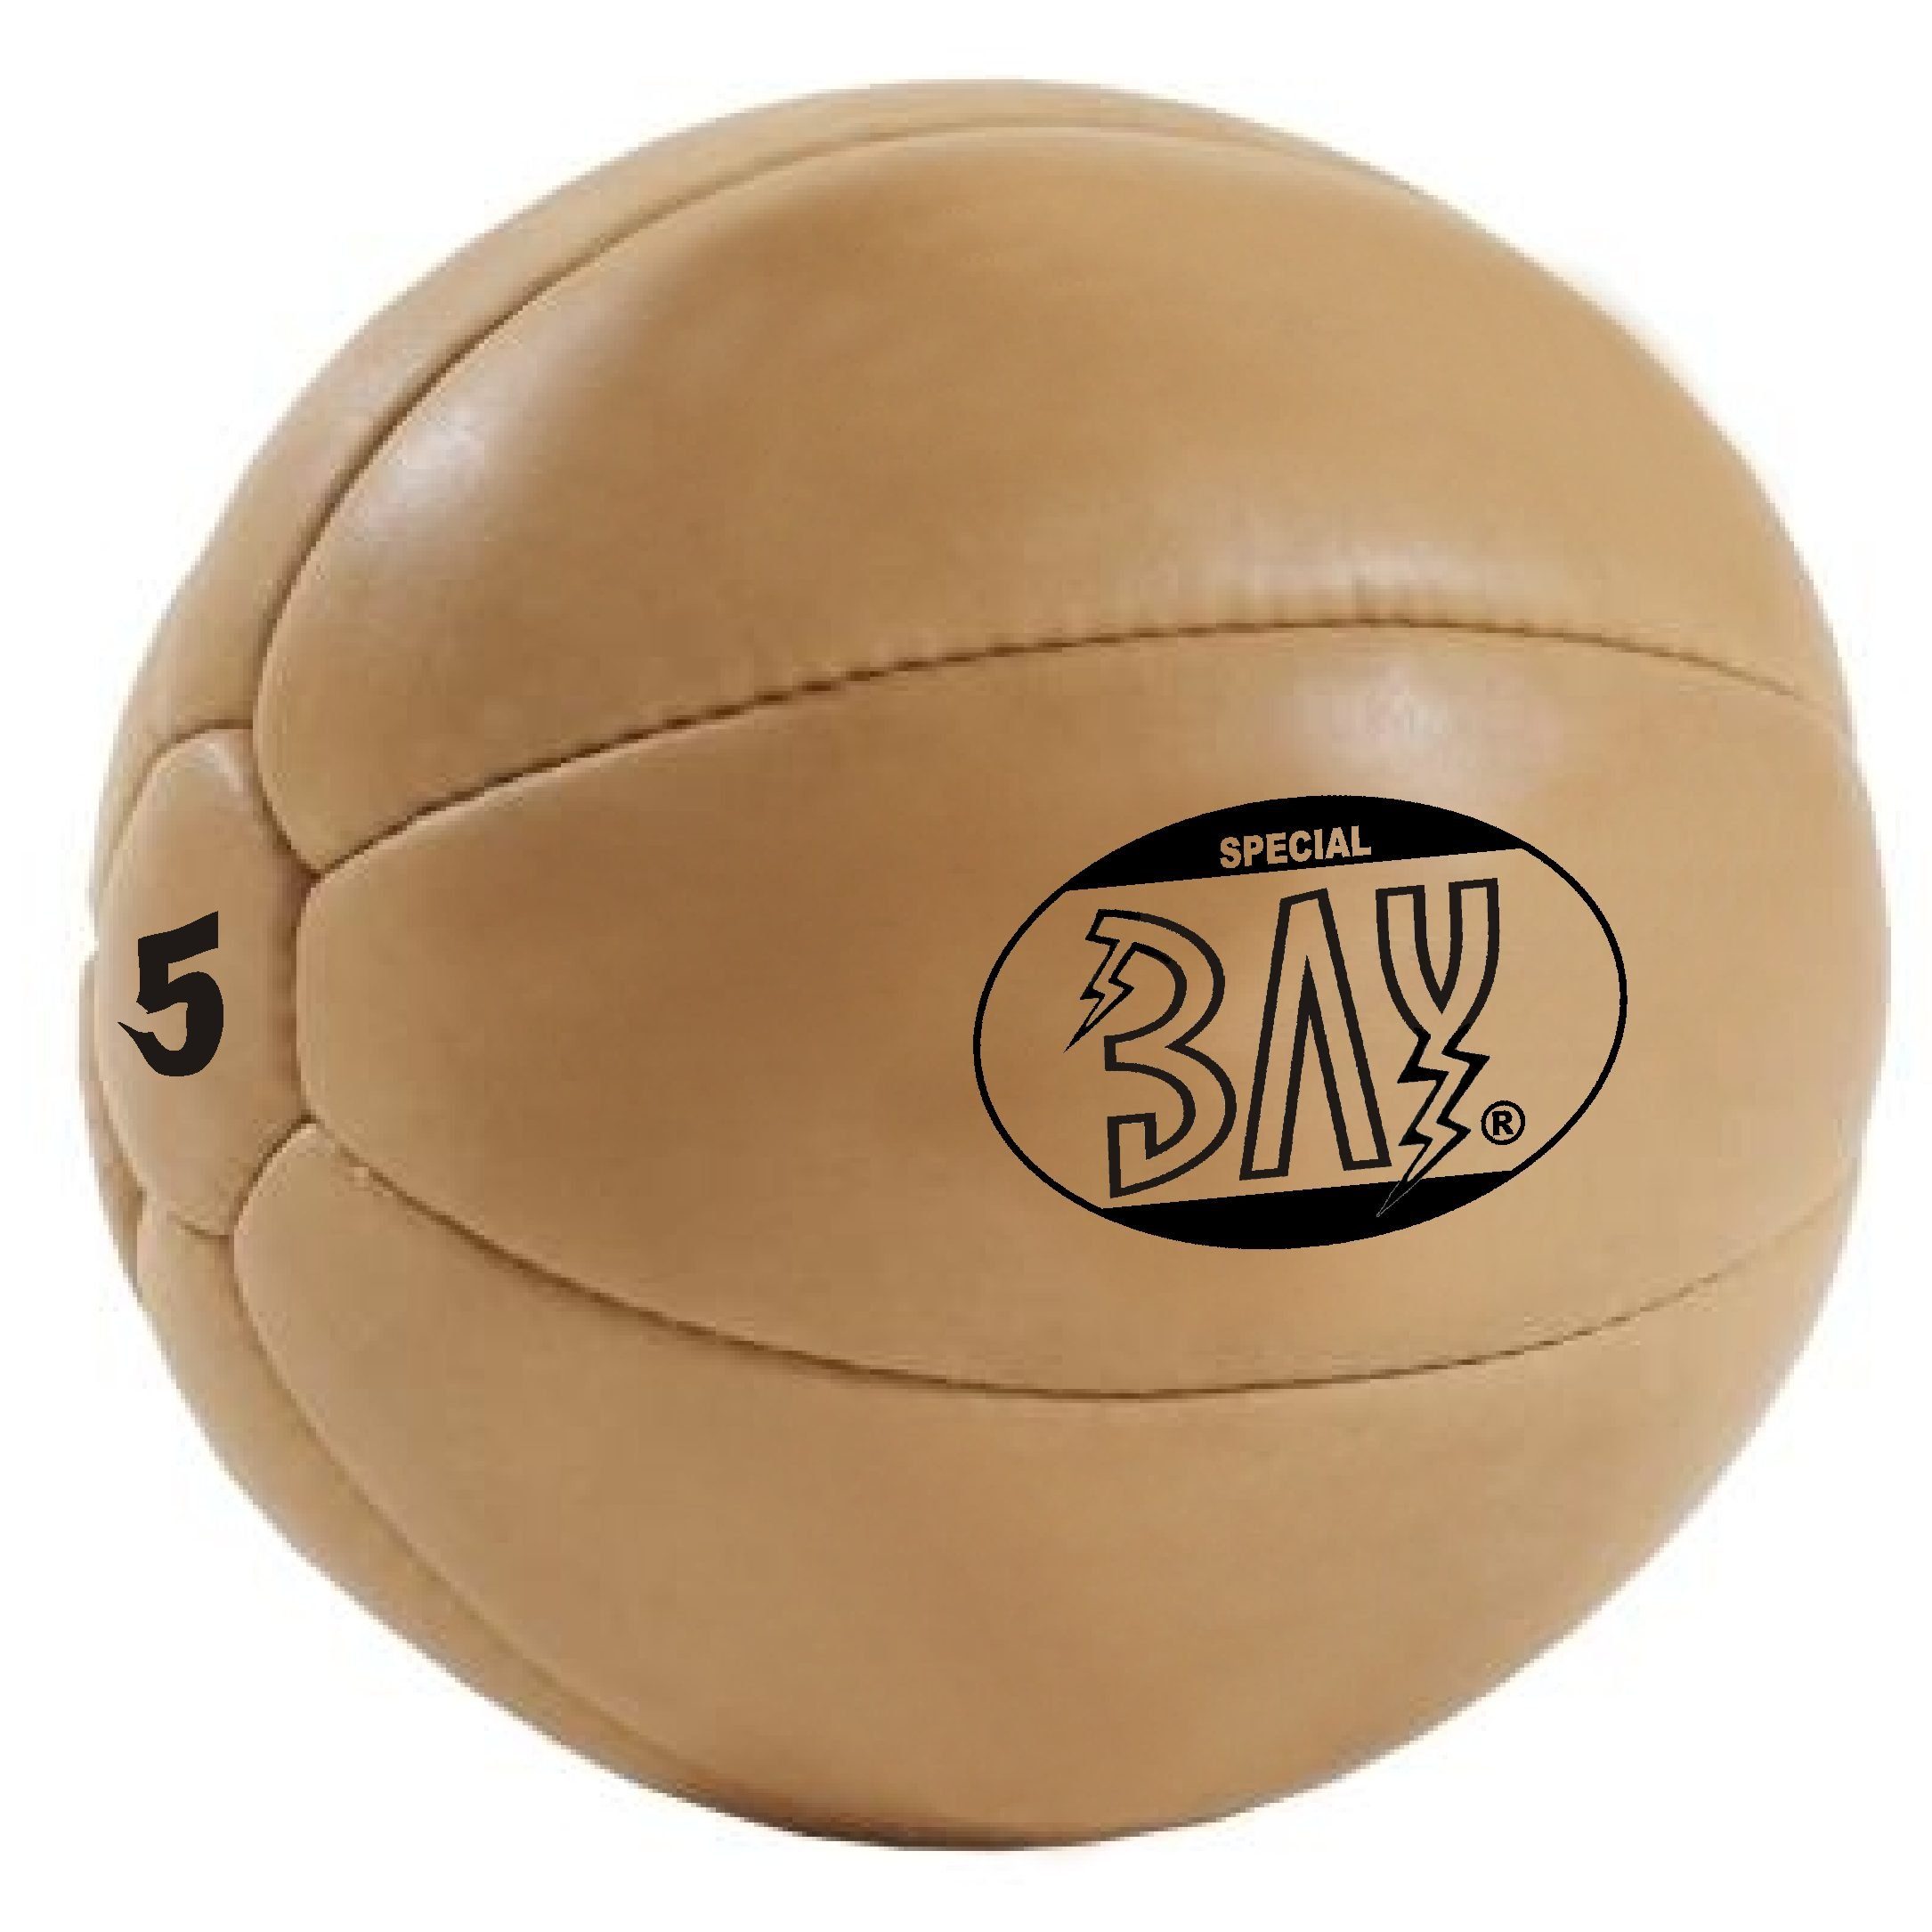 BAY-Sports natur Vollball Trainingsball Fitnessball 5 Kunstleder Kraftsport braun Medizinball klassische Profi kg Ausführung Kraftball, 5kg